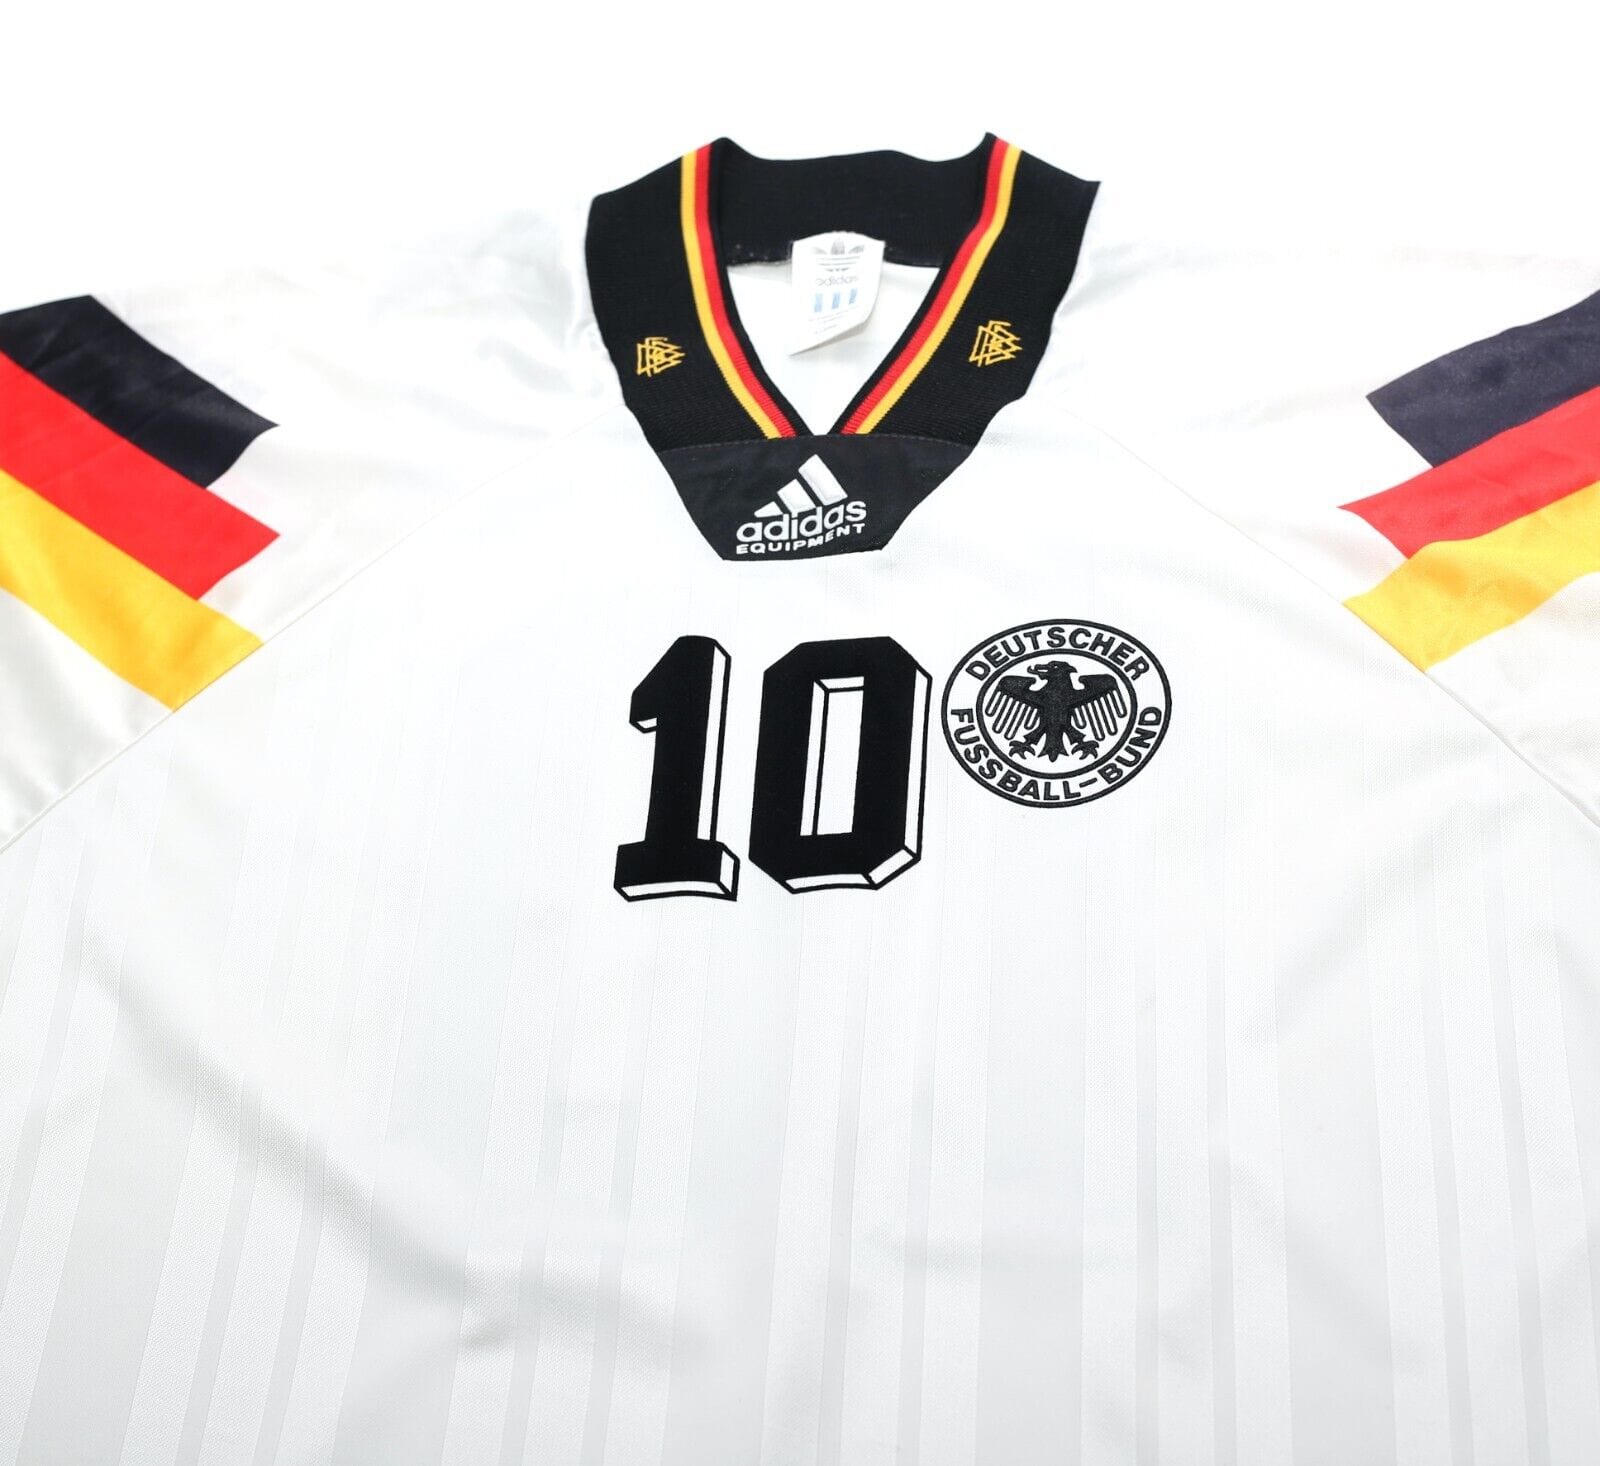 1992/94 MATTHAUS #10 Germany Vintage adidas Home Football Shirt (L/XL)